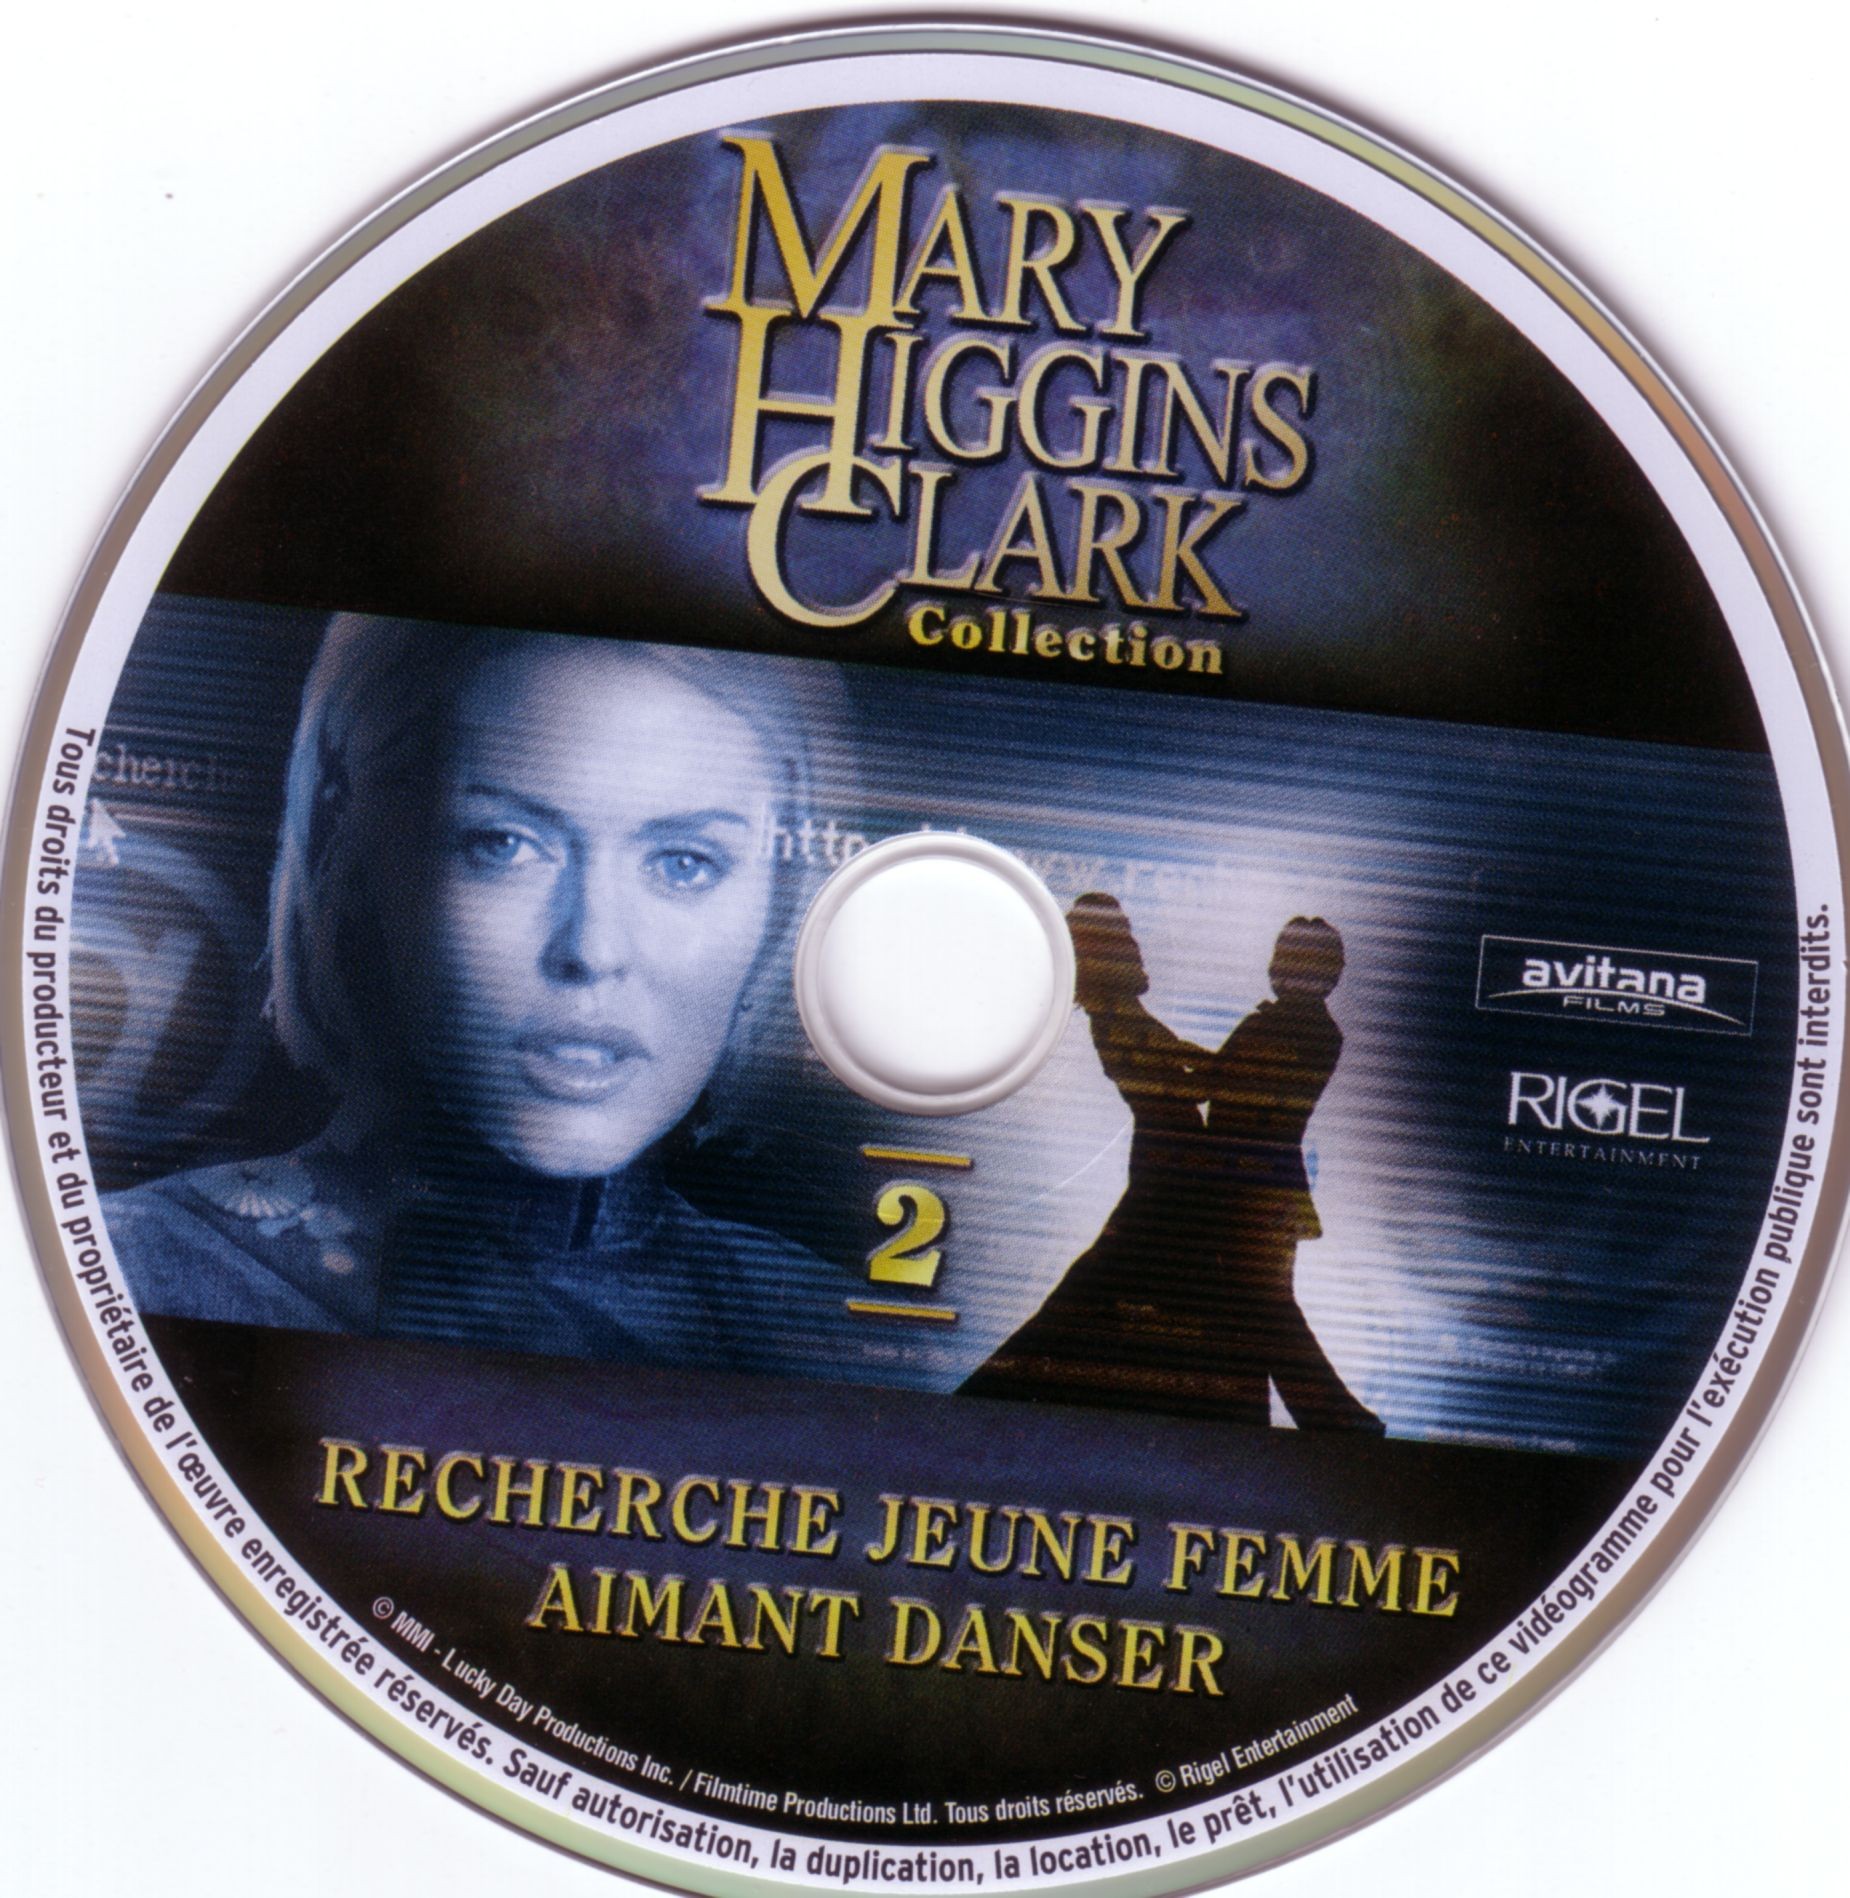 Sticker de Mary Higgins Clark vol 02 - recherche jeune femme @imant danser - Cinéma ...